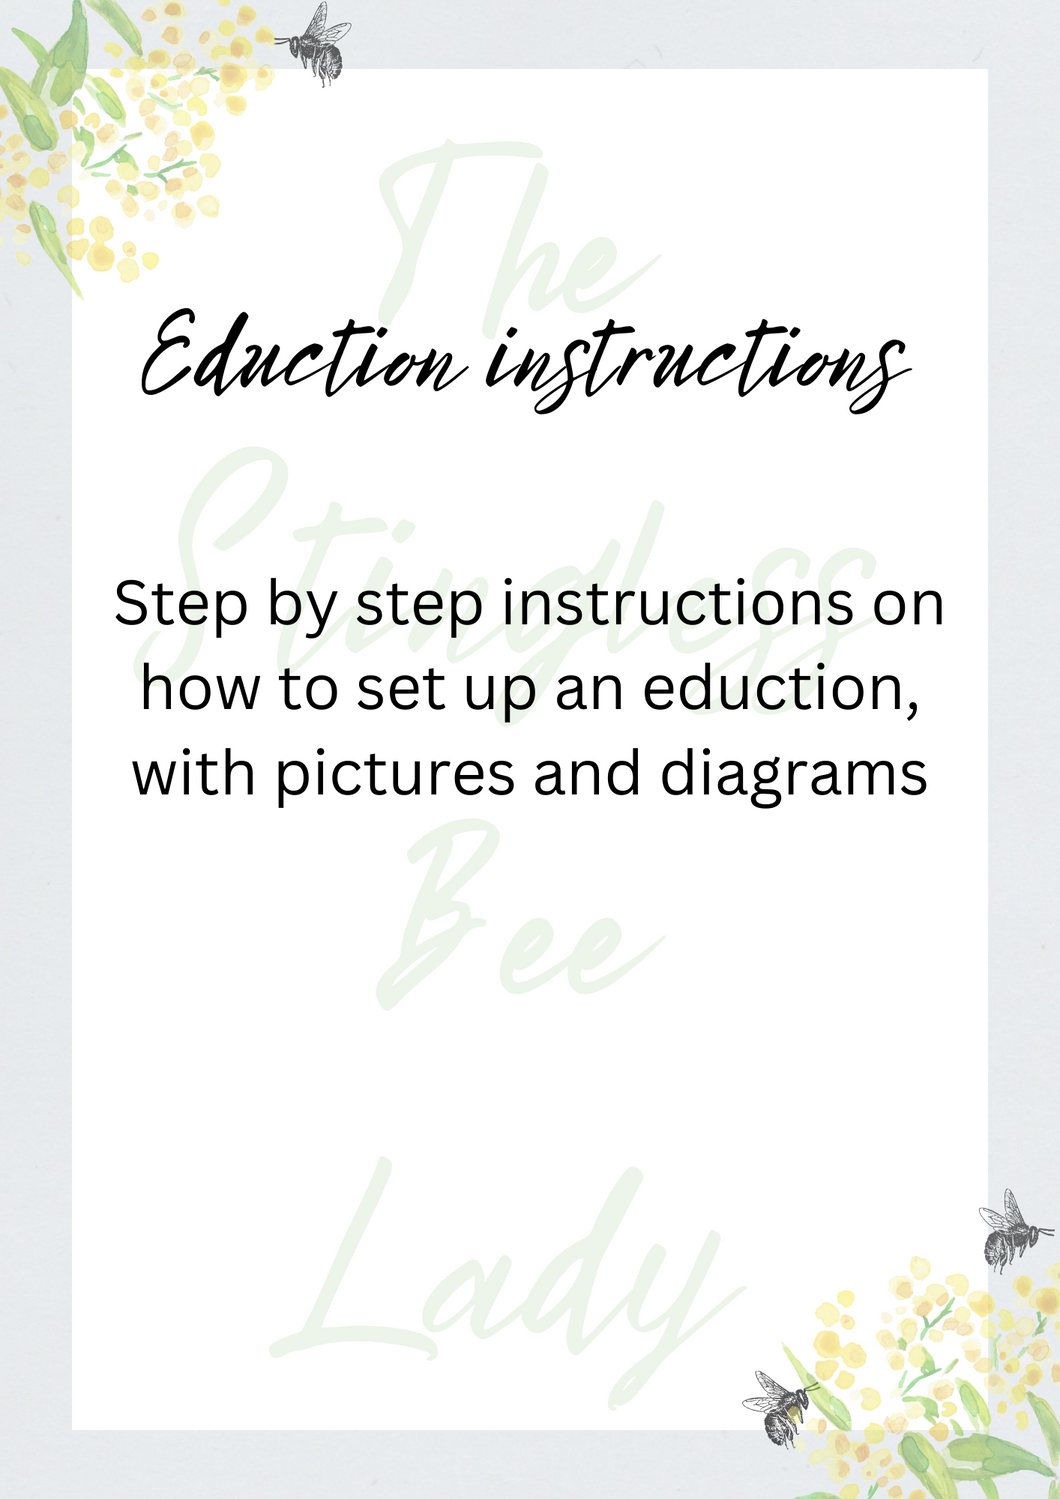 Eduction instructions